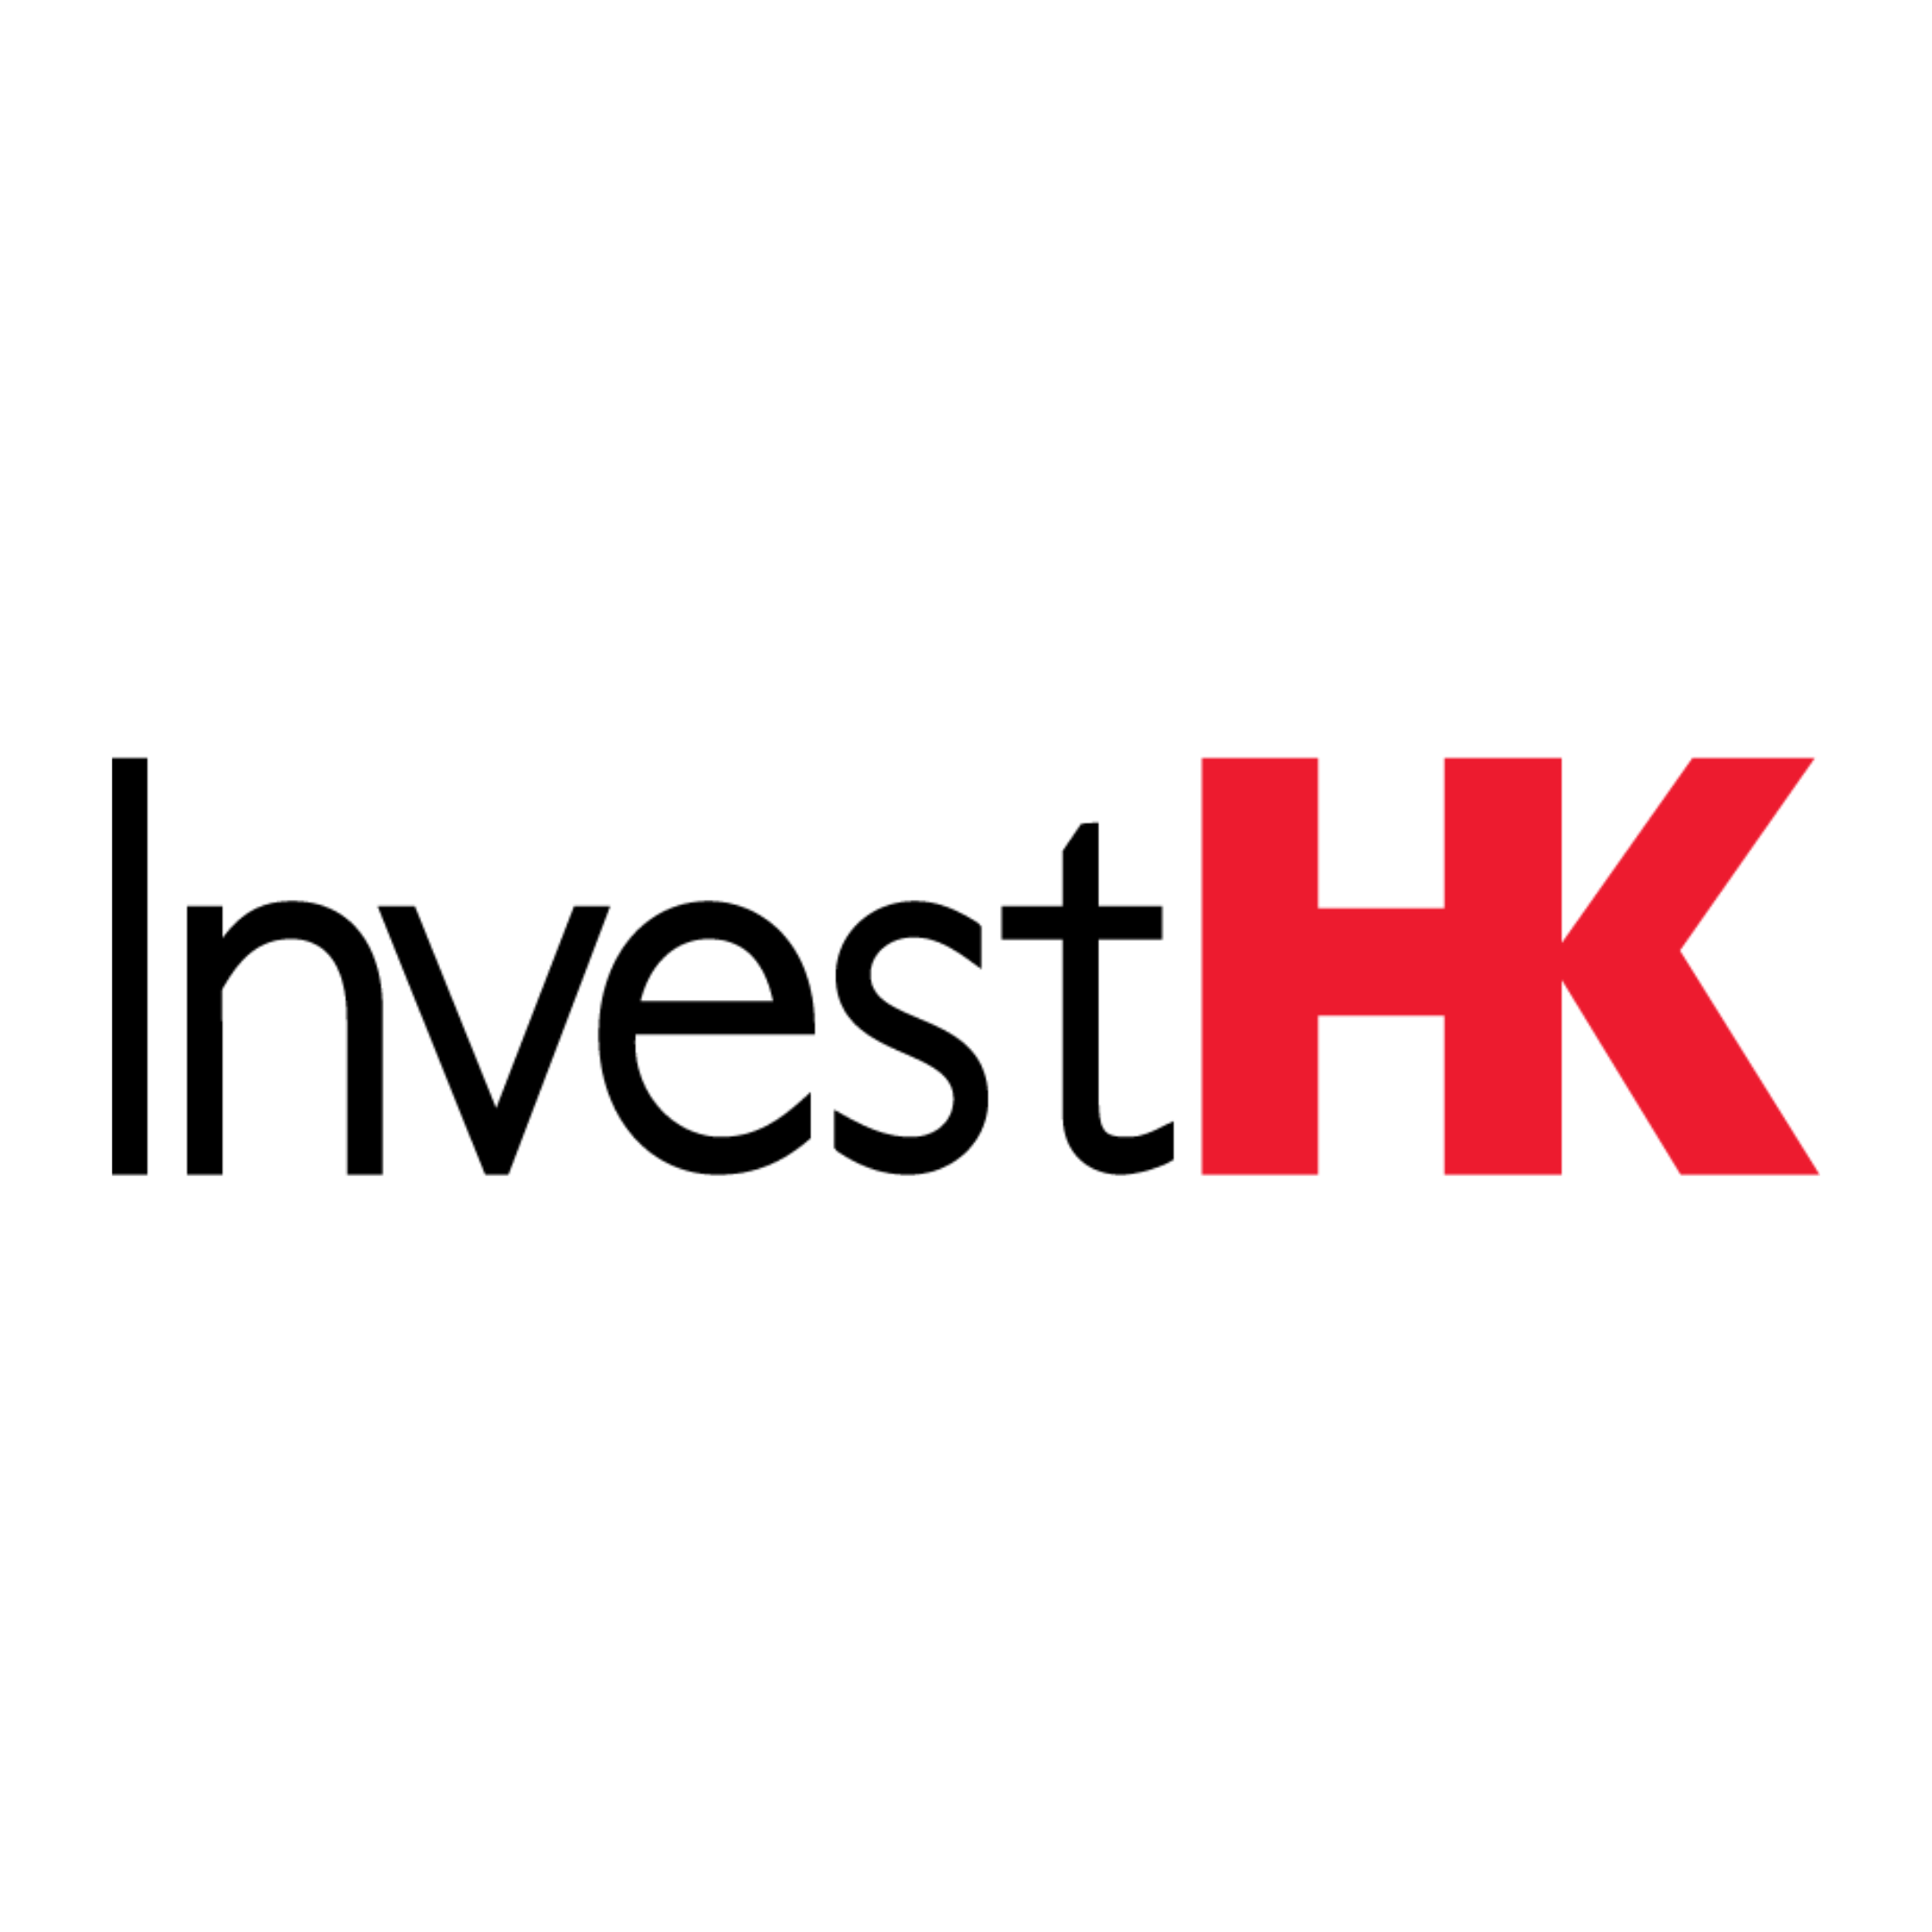 InvestHK logo